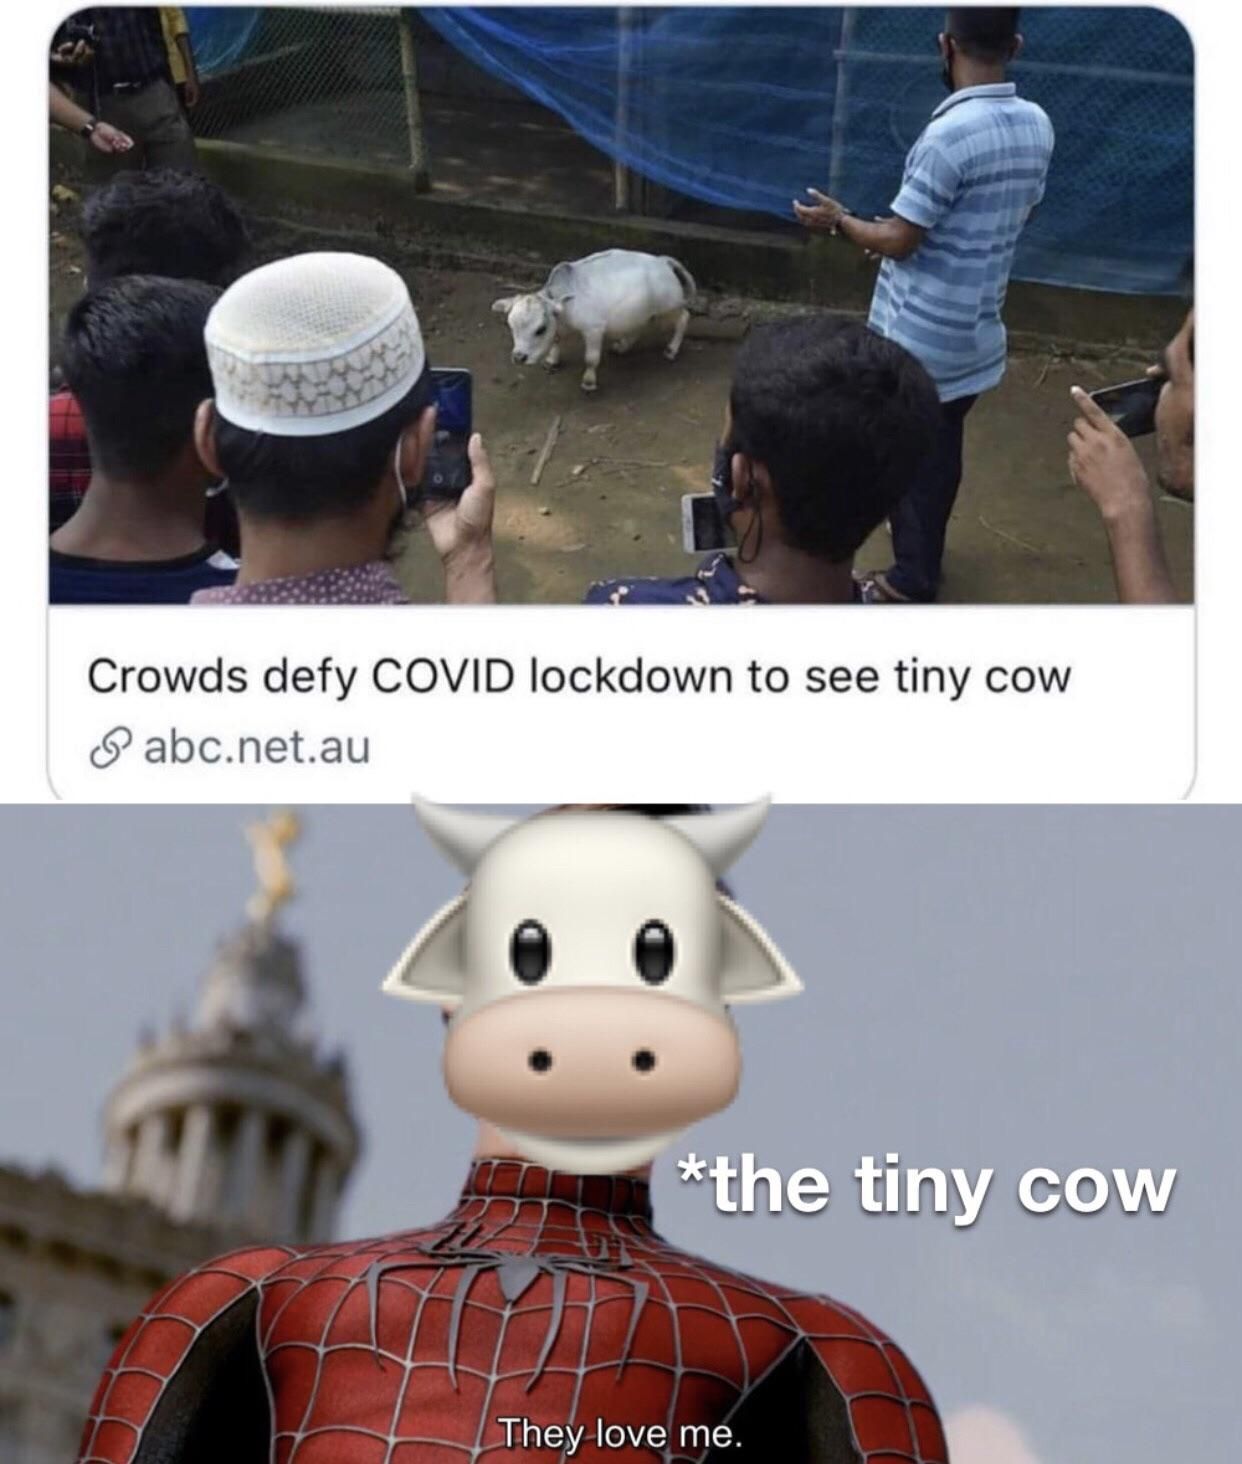 All hail the tiny cow